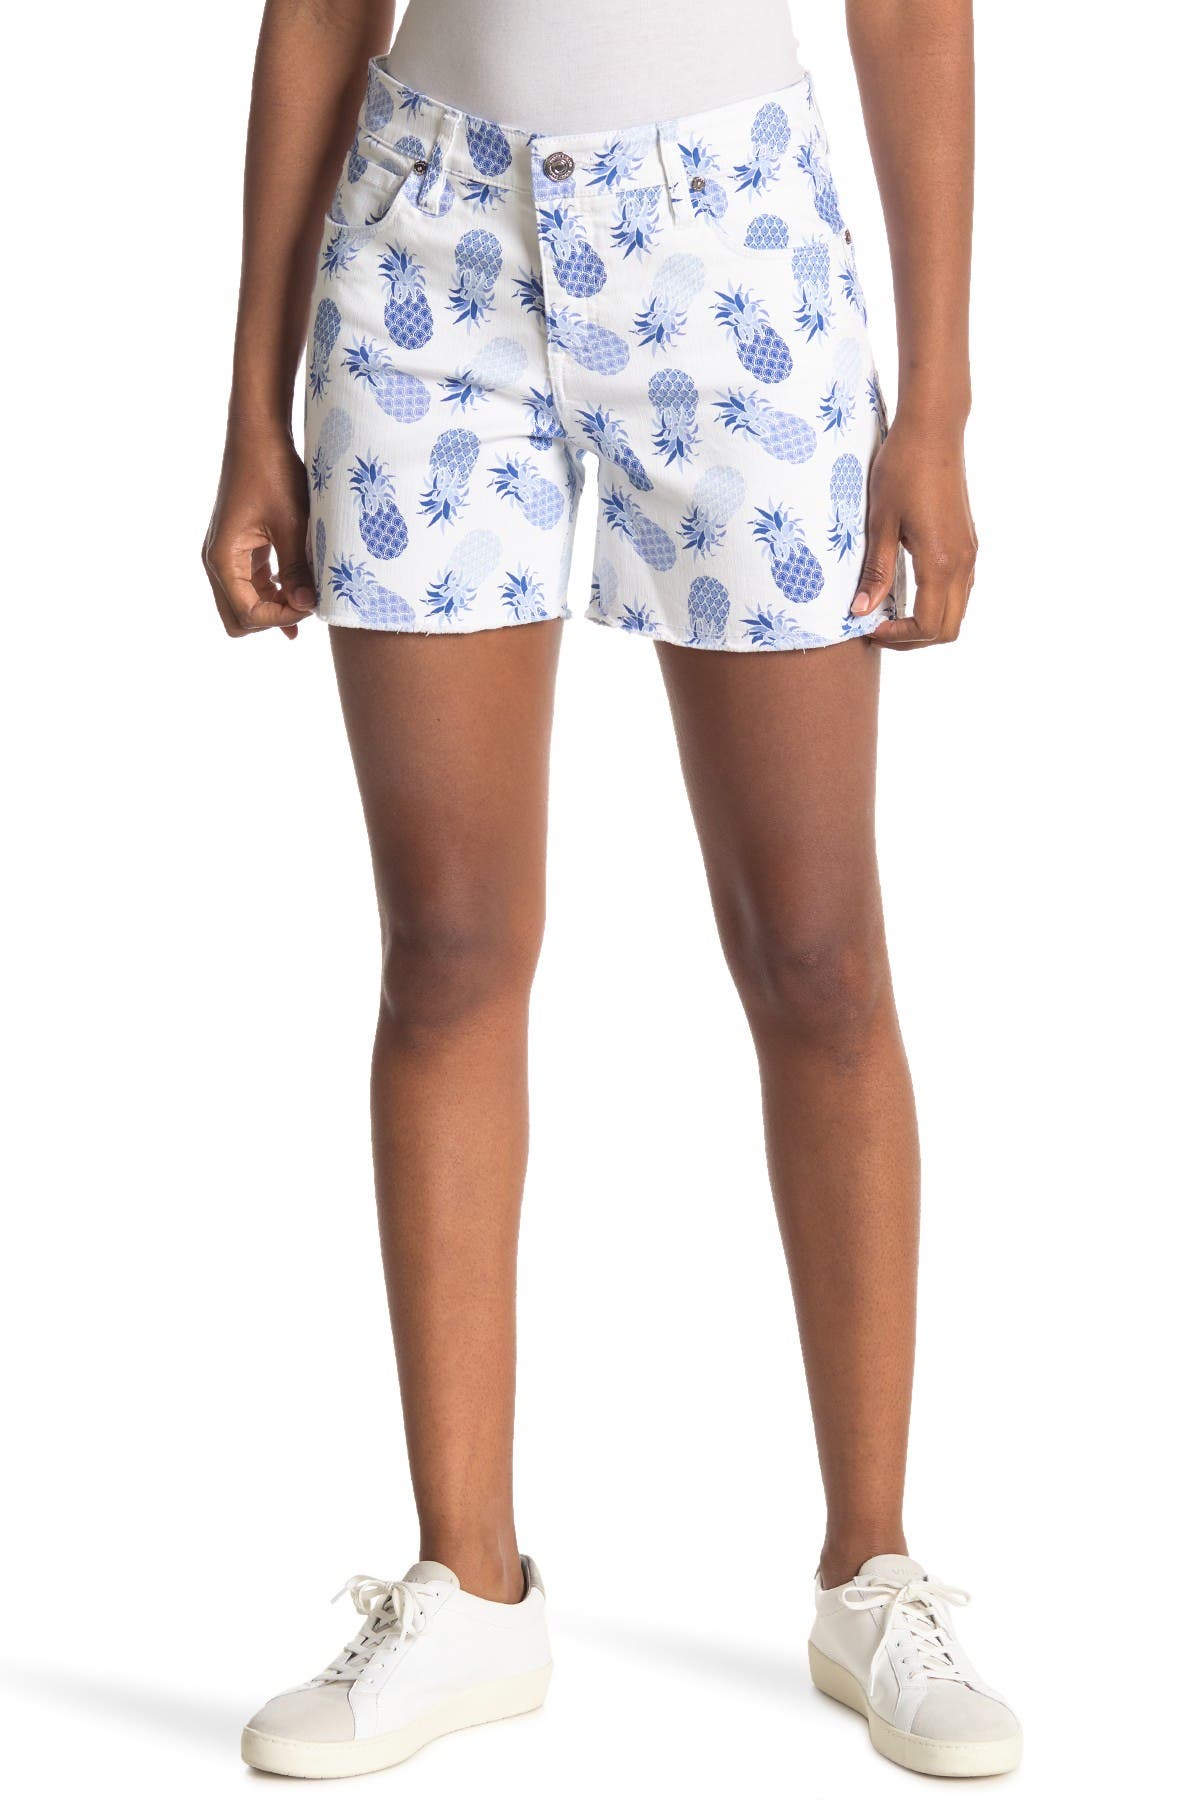 tommy bahama ladies shorts